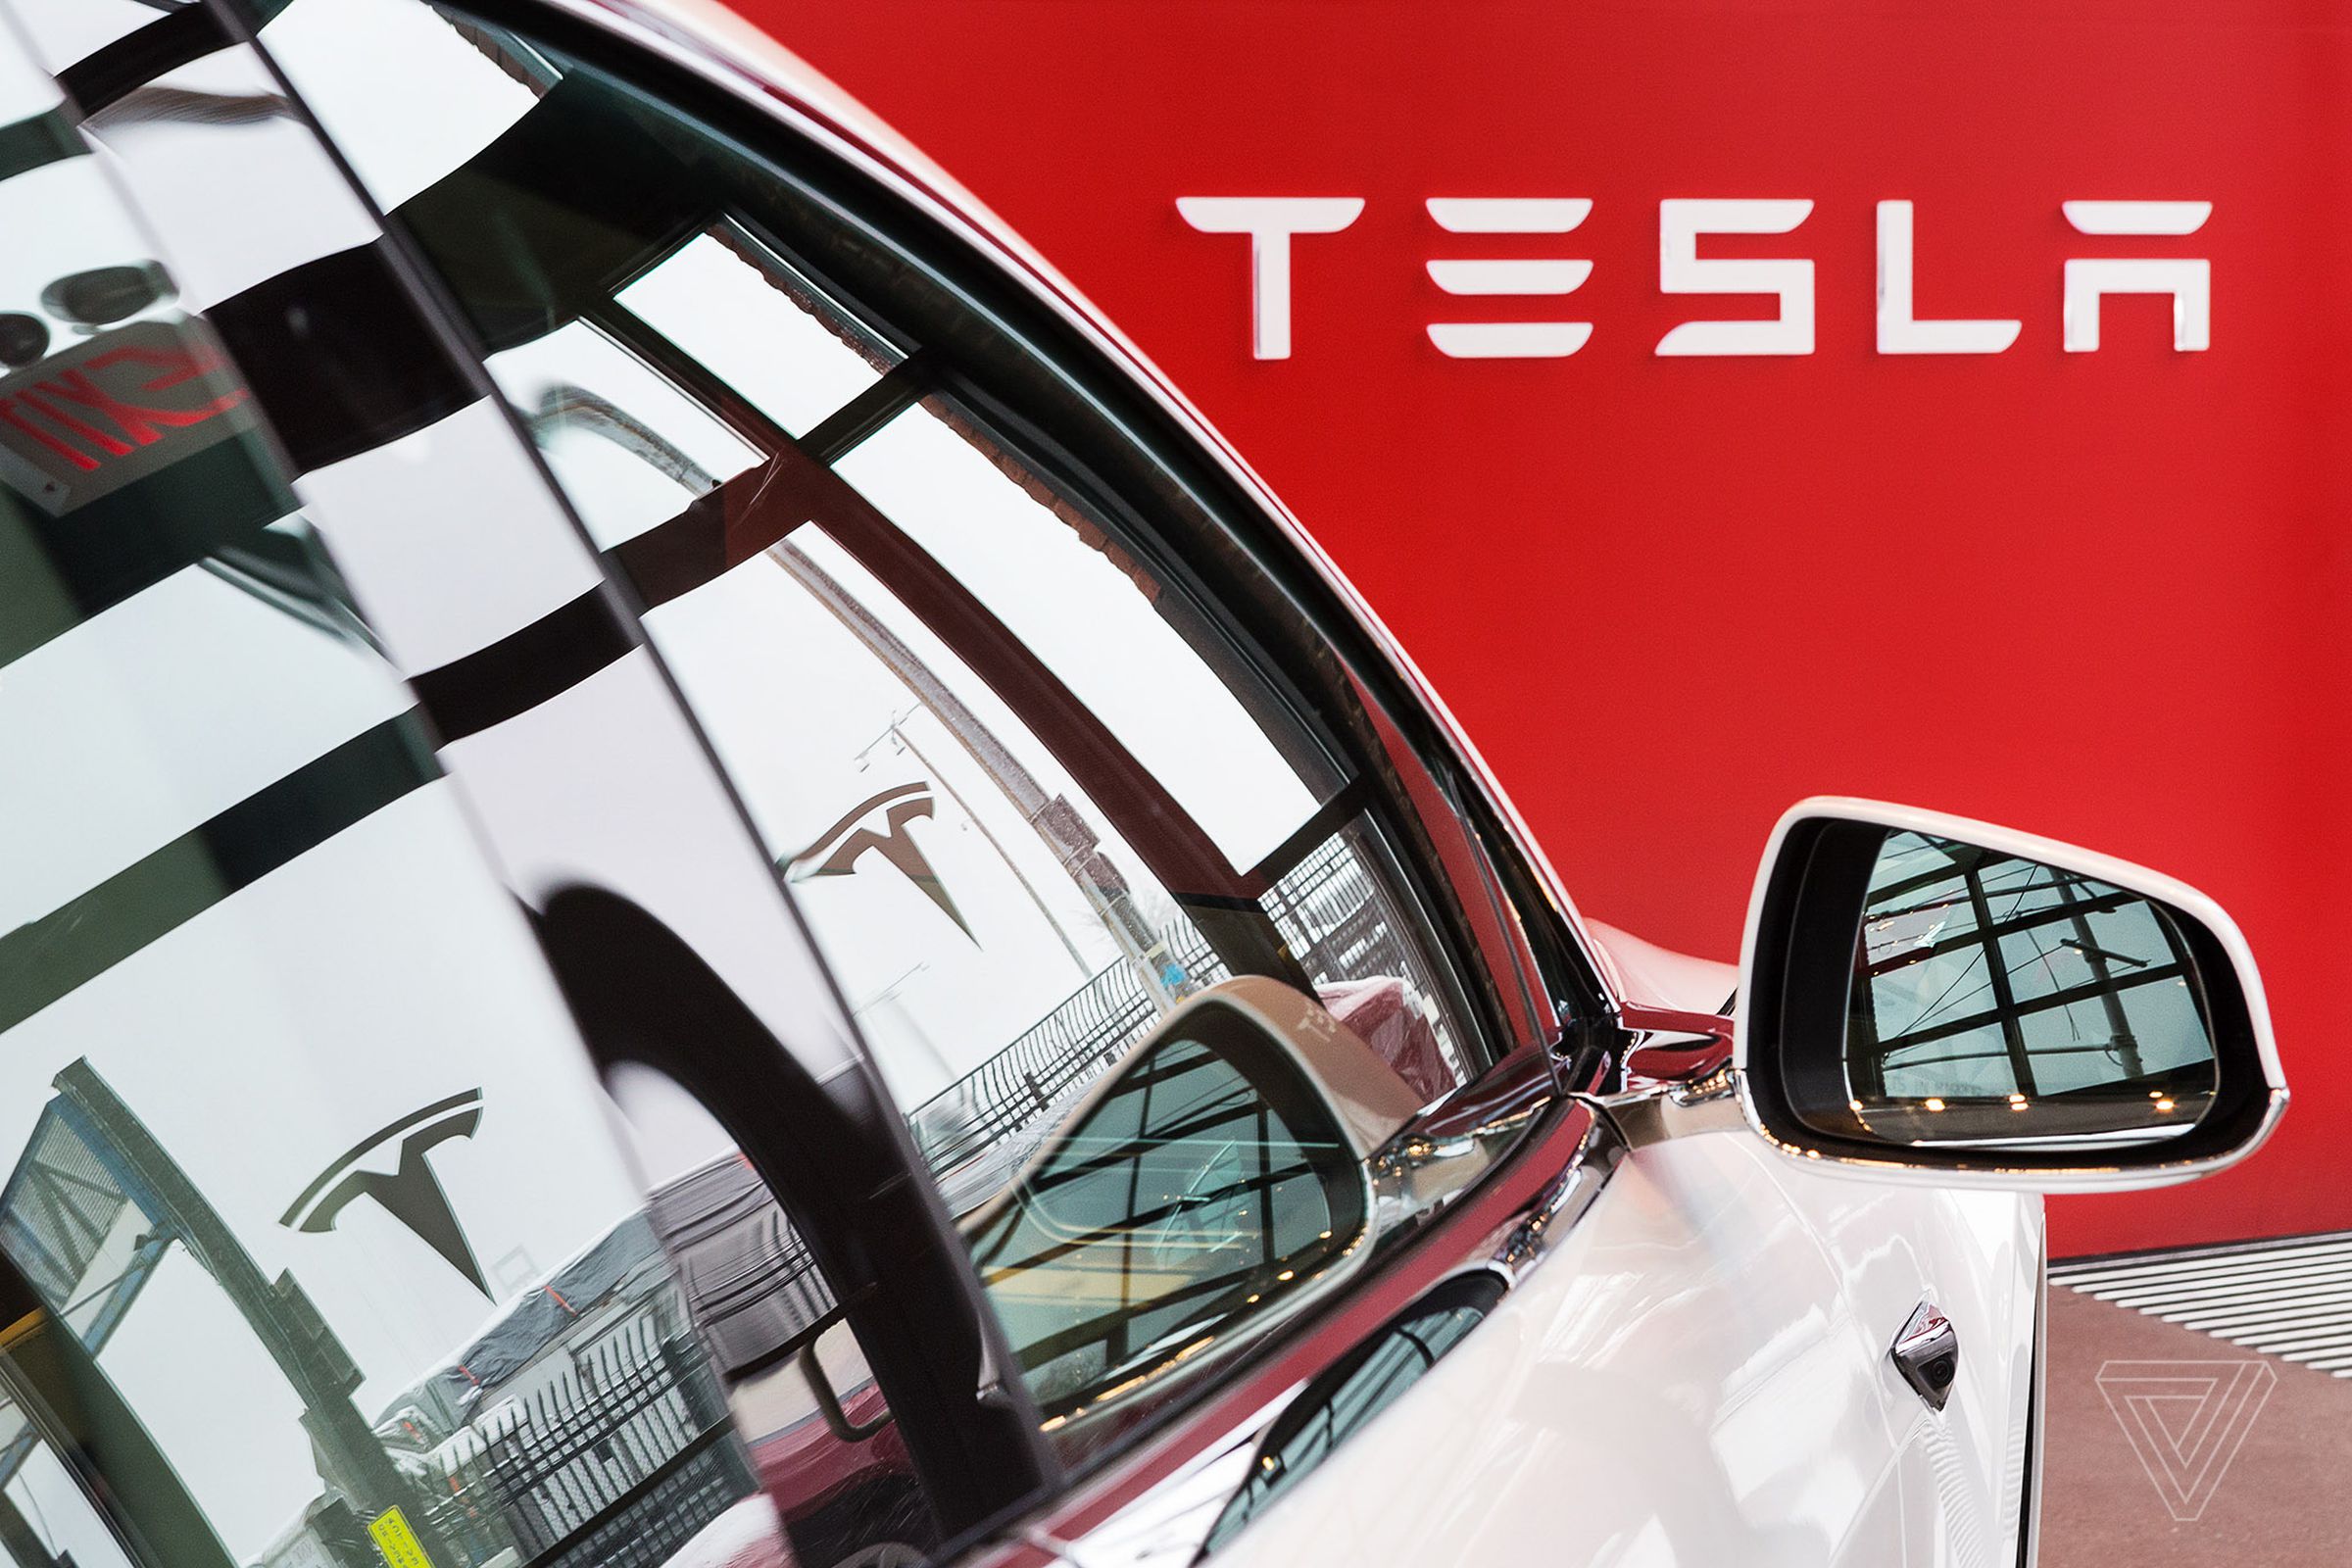 Four of Teslas EVs got price hikes this weekend